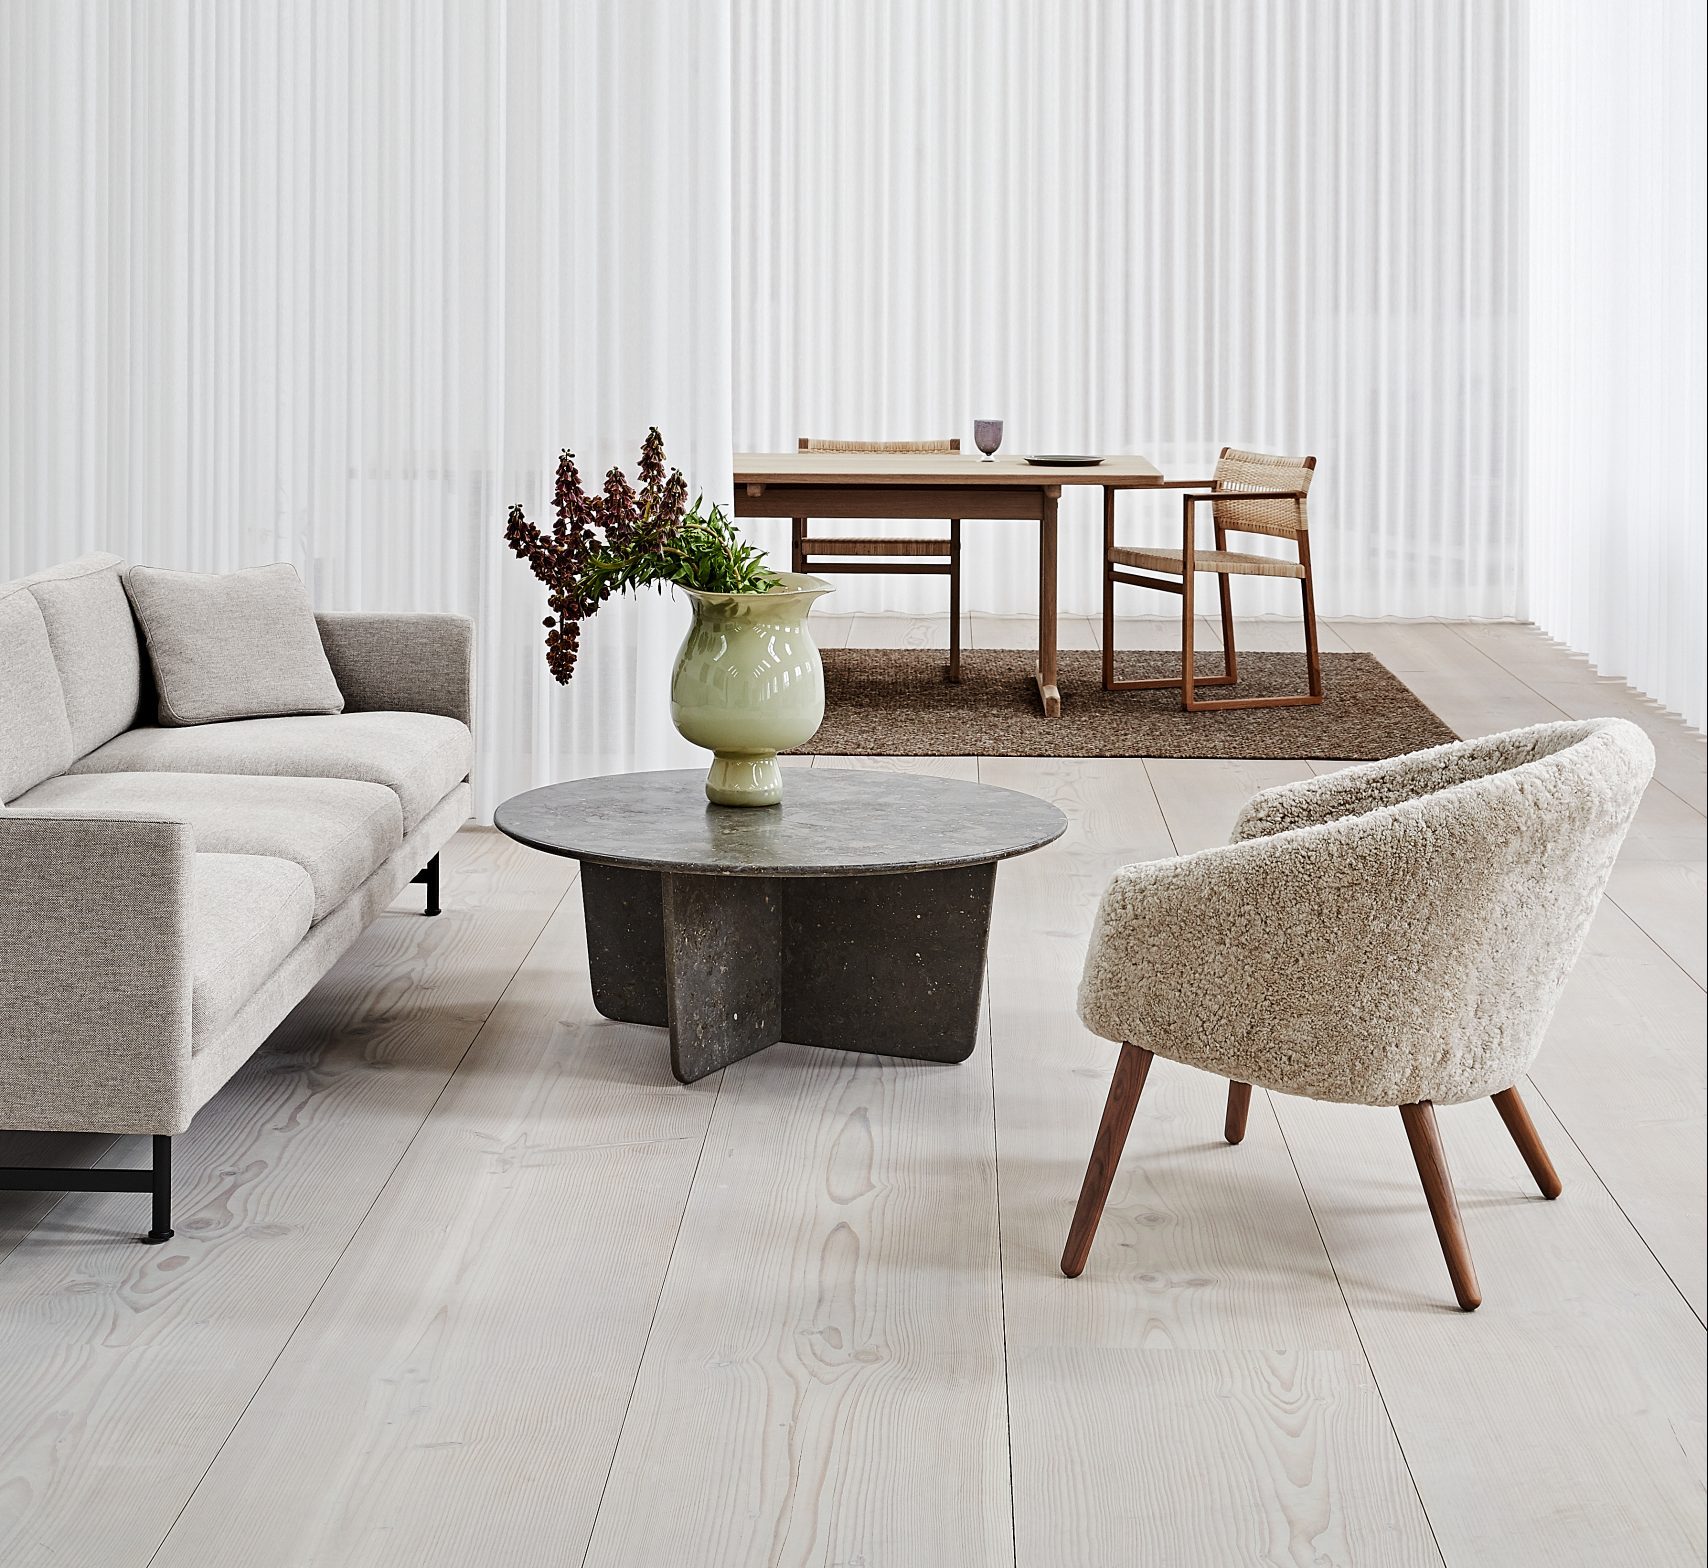 Sofabord Tableau Space Copenhagen Fredericia Furniture